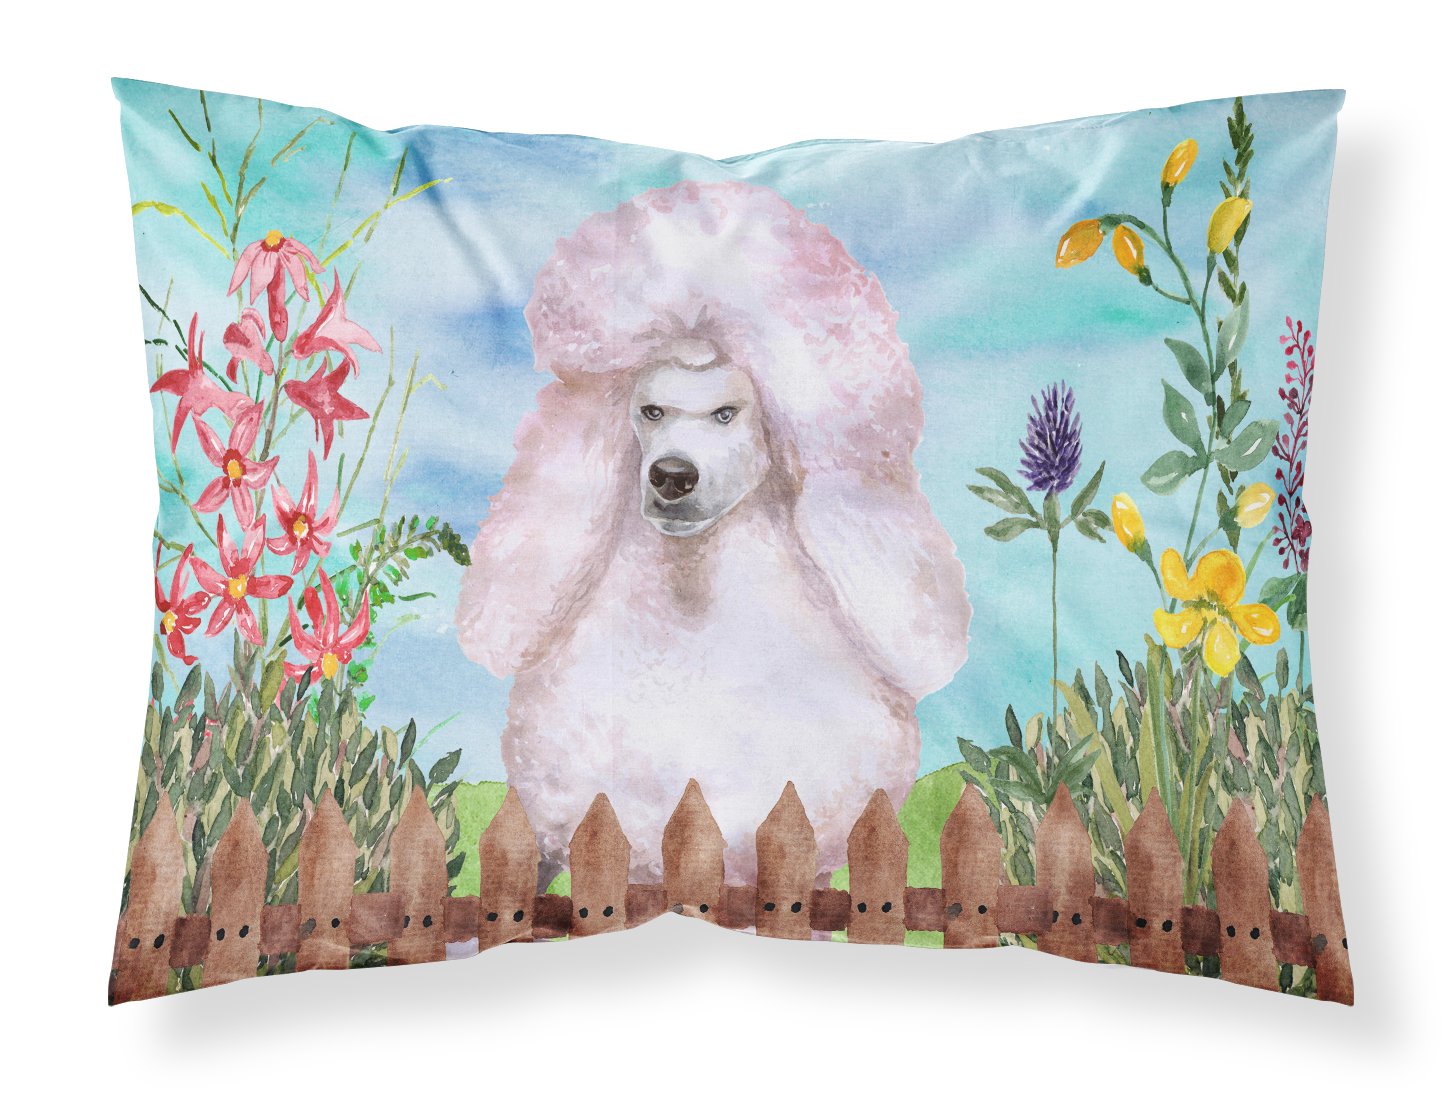 White Standard Poodle Spring Fabric Standard Pillowcase CK1279PILLOWCASE by Caroline's Treasures